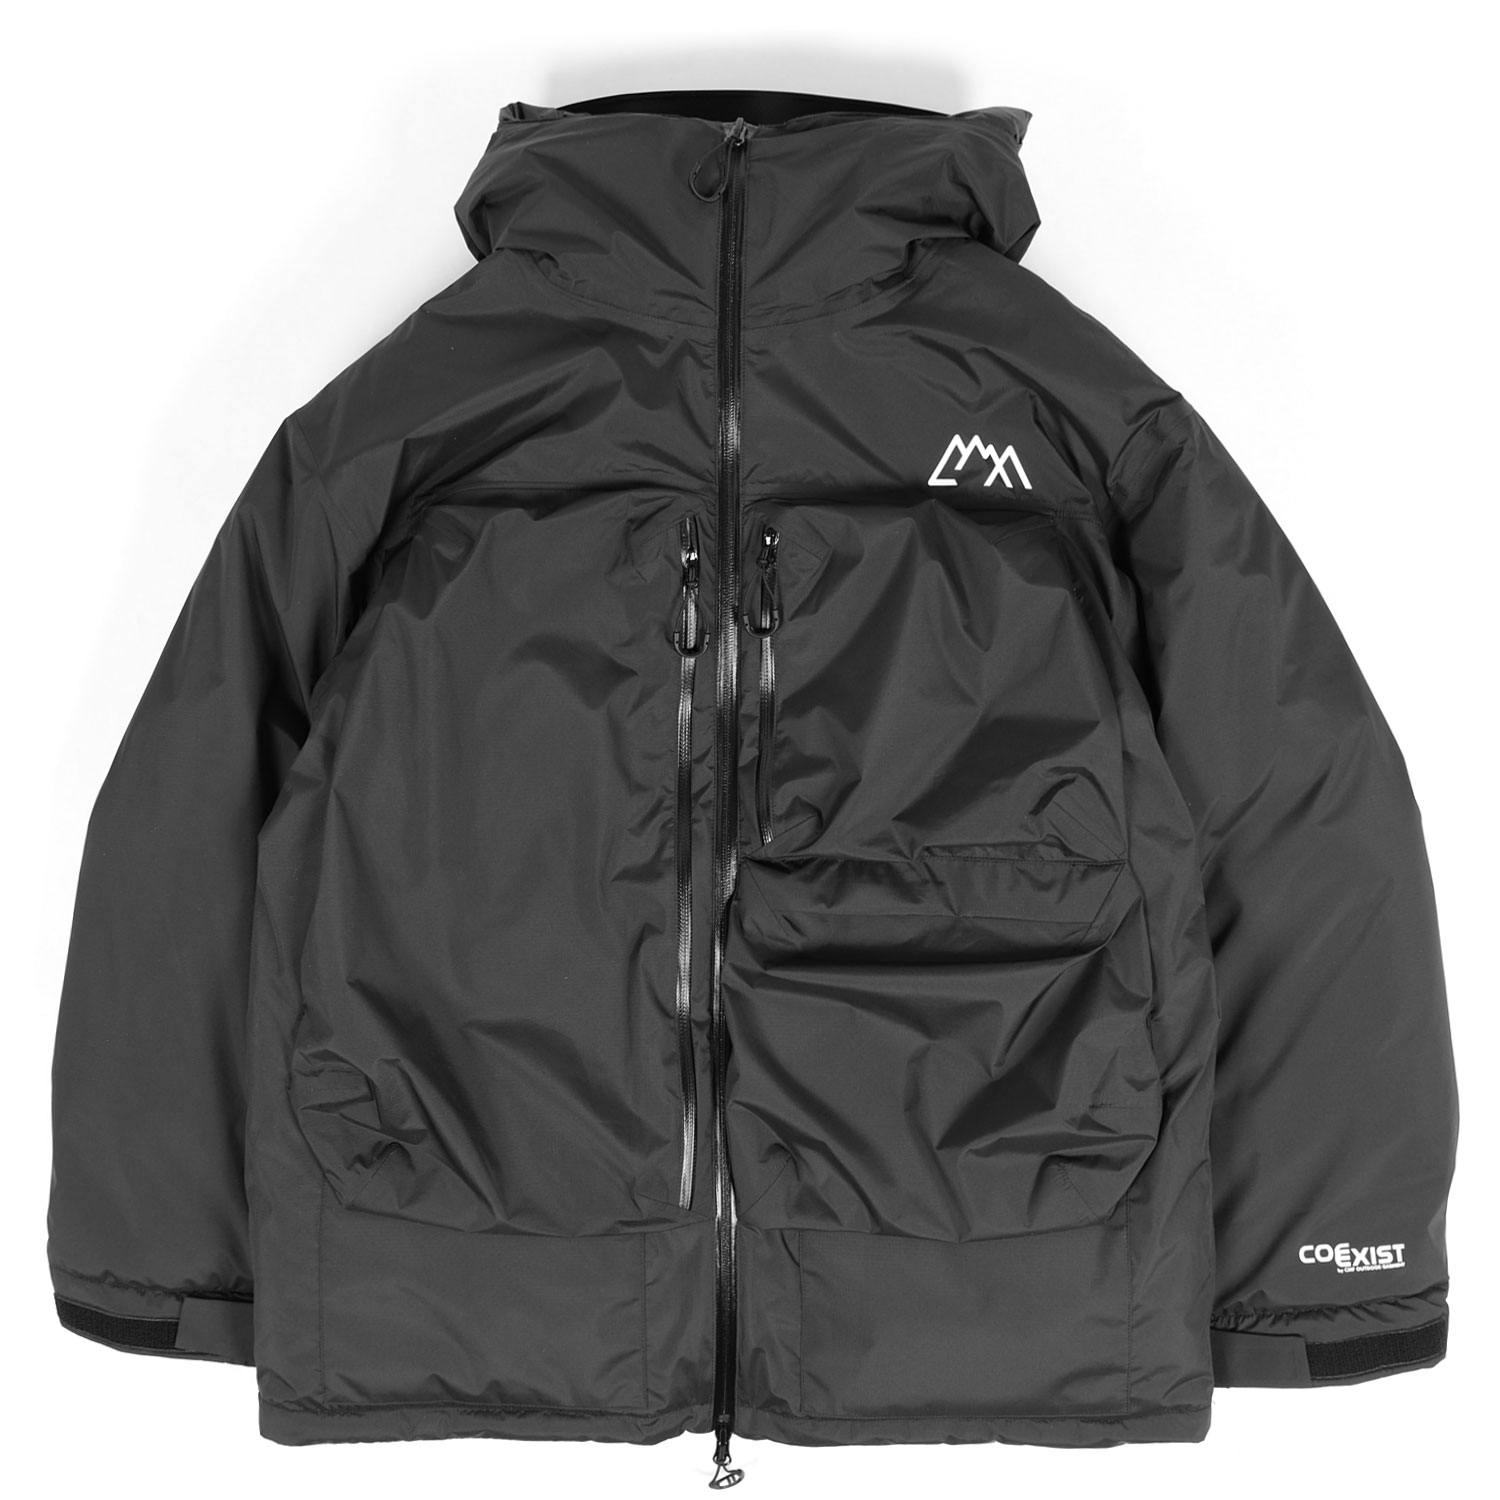 CMF Outdoor Garment Guide Down Coexist L7 Jacket | FIRMAMENT